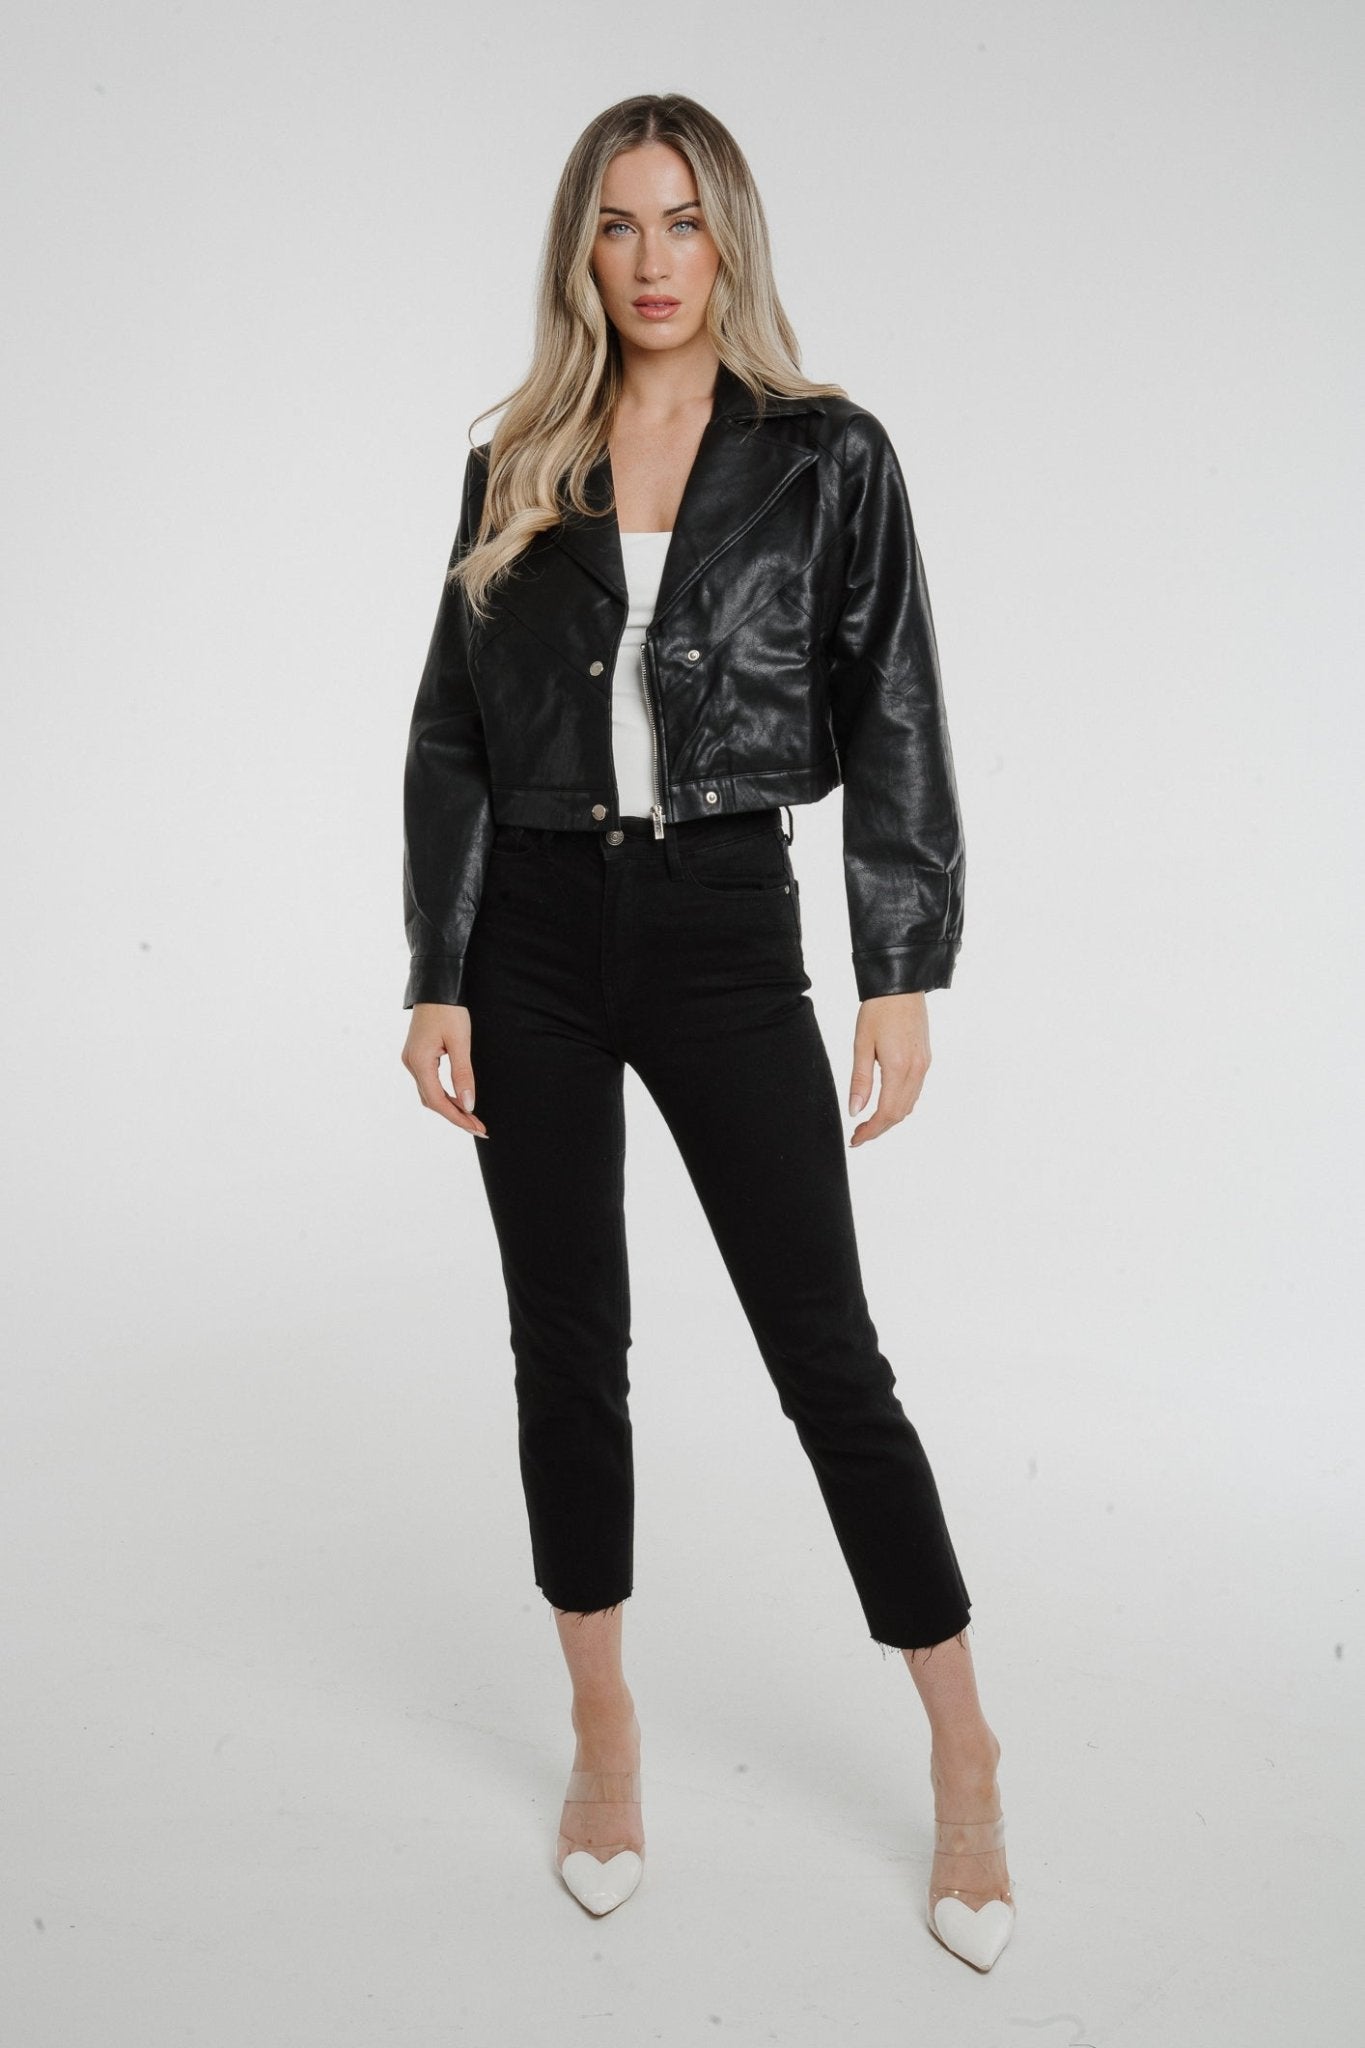 Jane Cropped Leather Jacket In Black - The Walk in Wardrobe